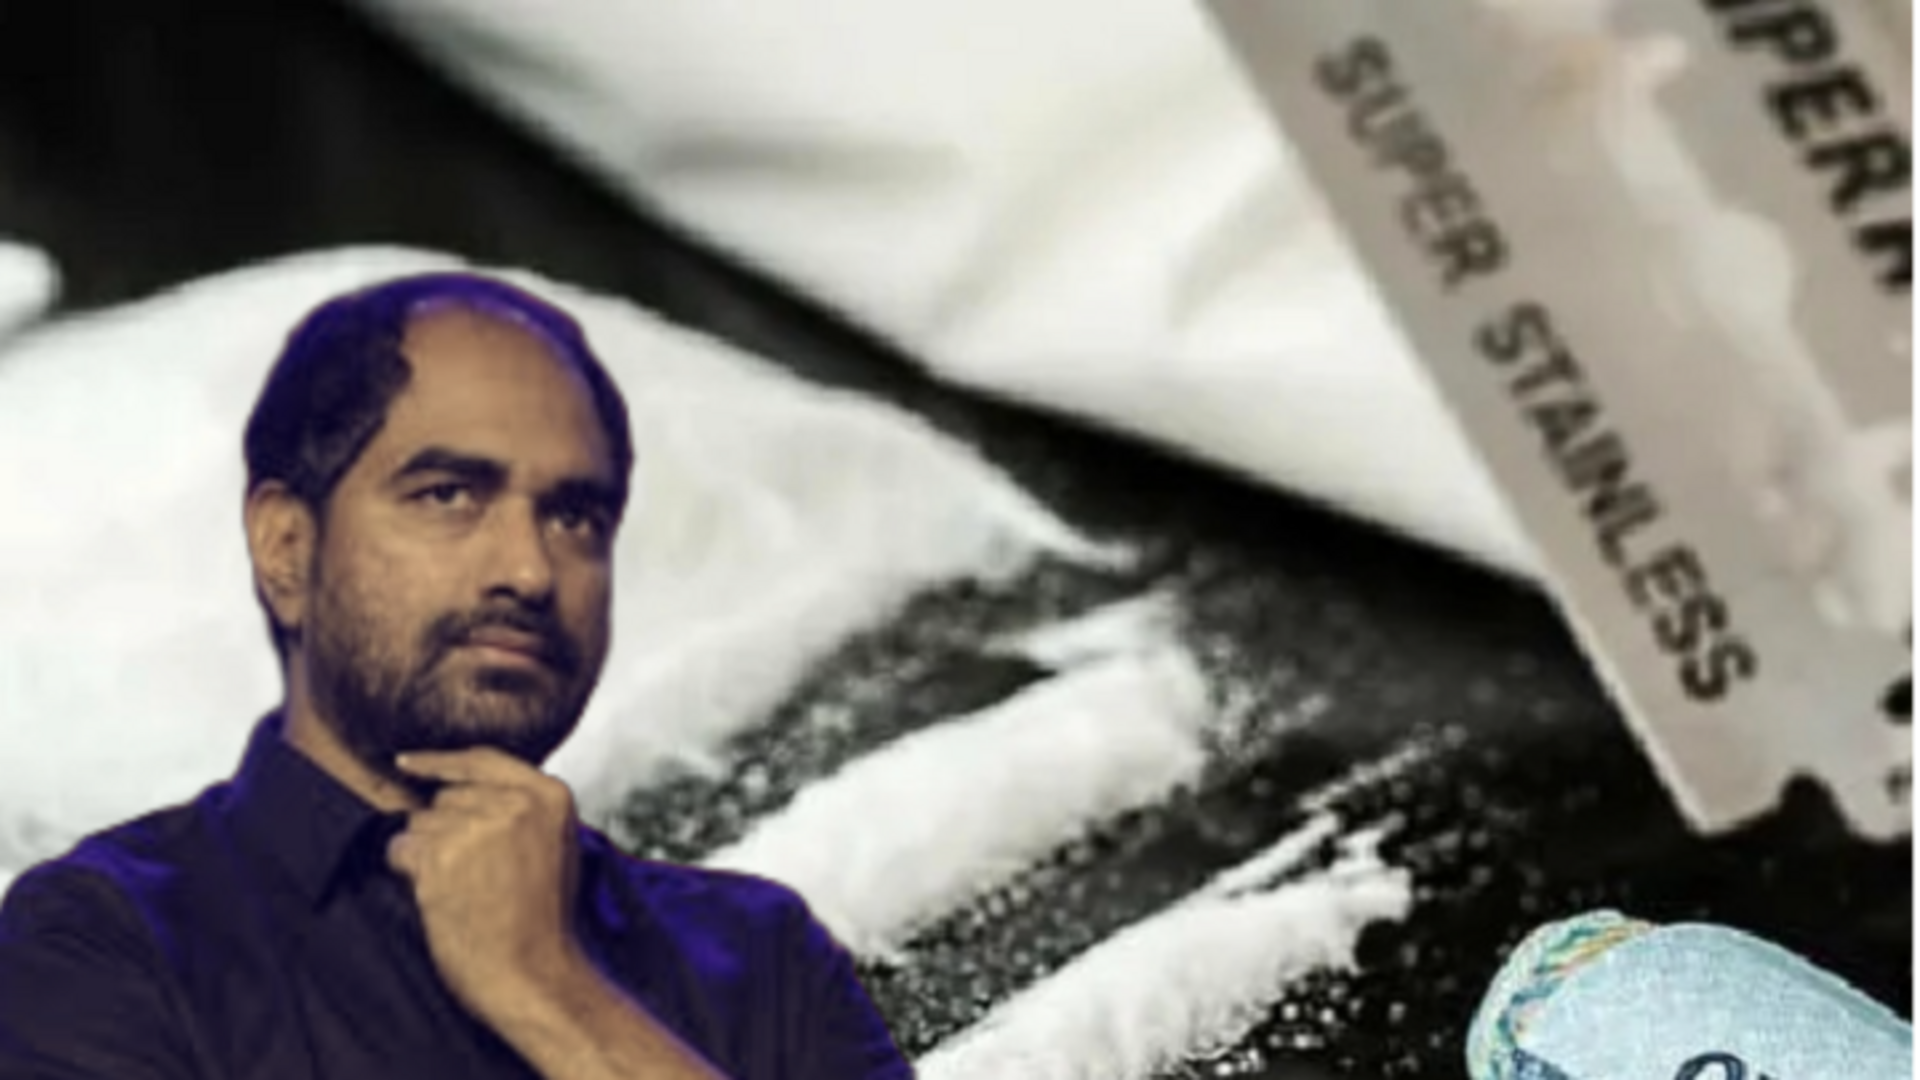 Radisson drugs case: డ్రగ్స్ కేసులో సినీ దర్శకుడు పరారీ, 160 సీఆర్‌పీసీ కింద నోటీసులు జారీ 